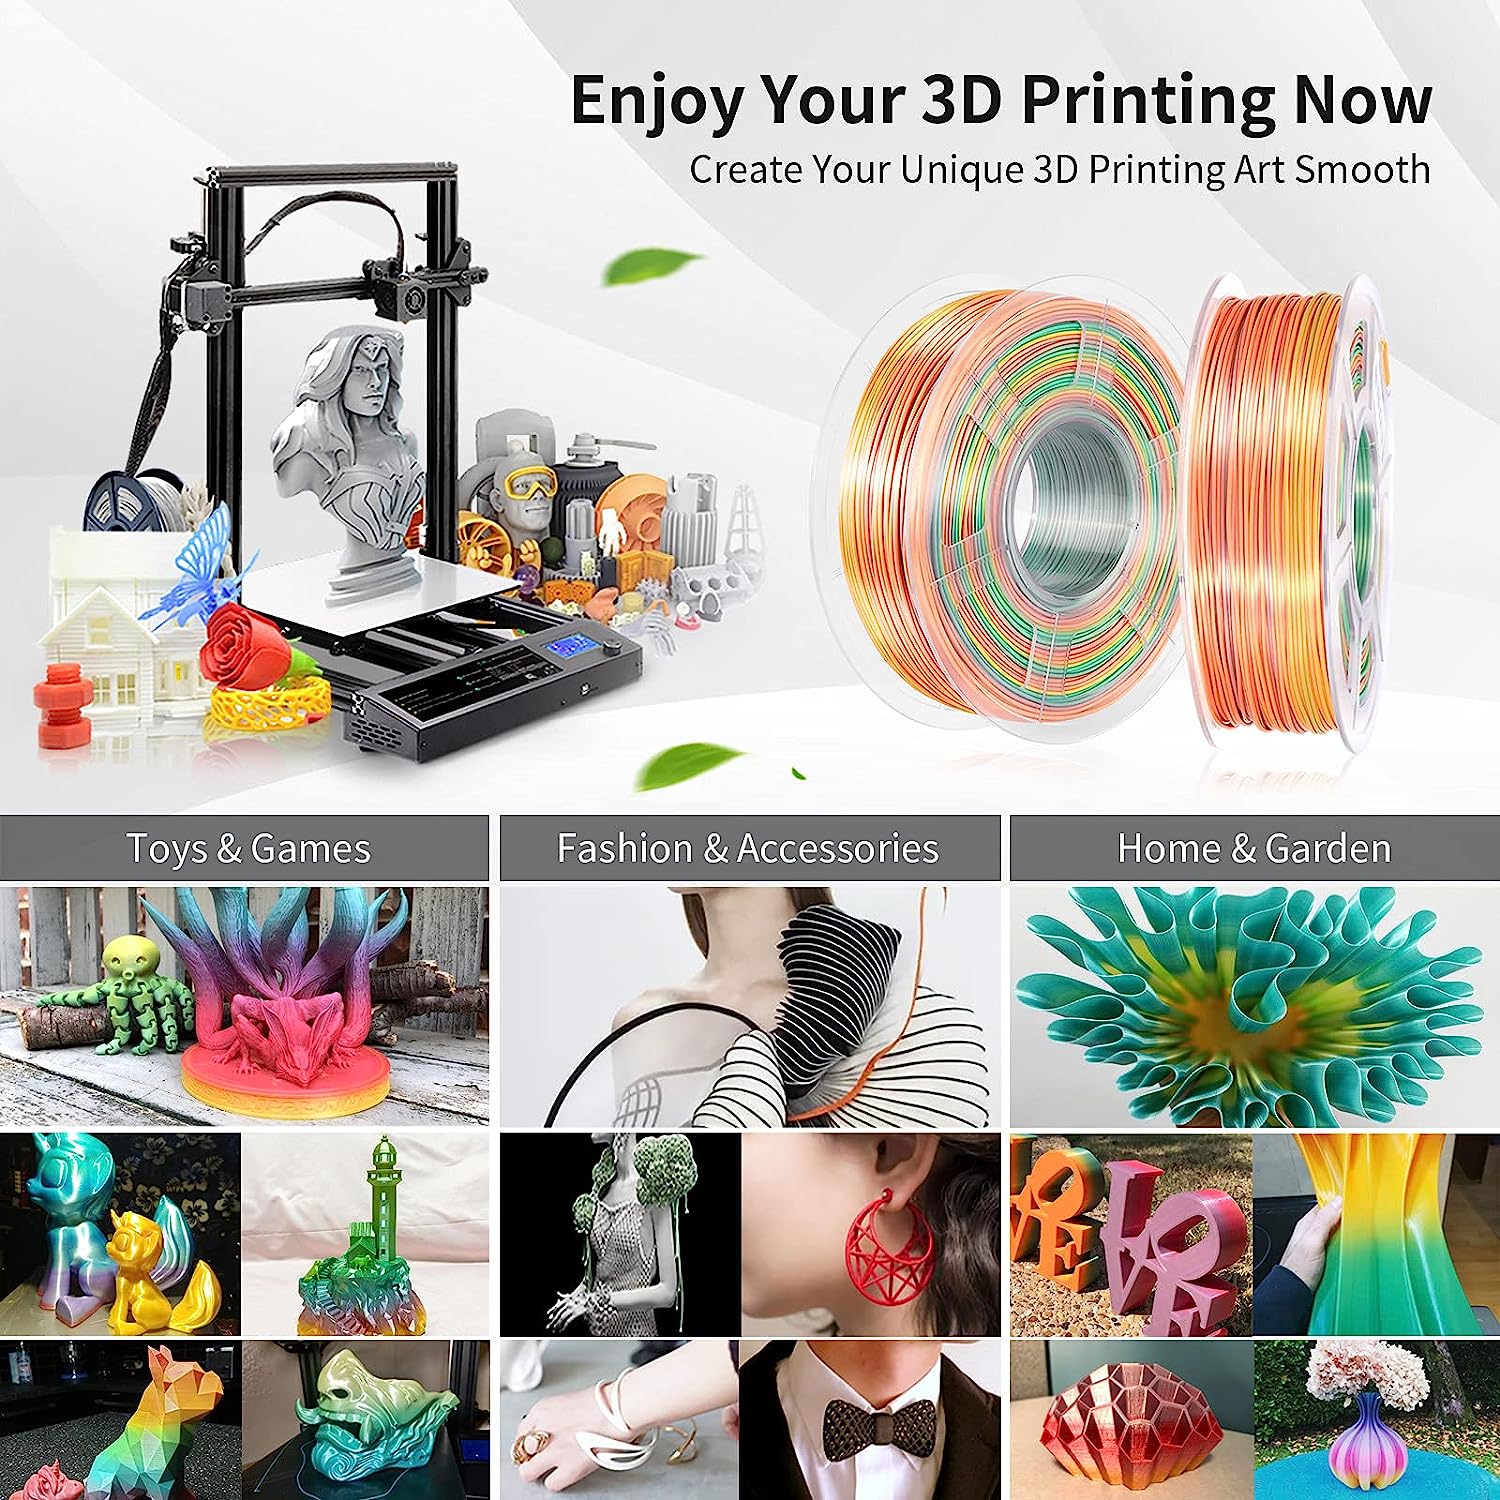 Filamento per stampante 3D SUNLU Silk PLA 1,75 mm 1 kg/2,2 libbre